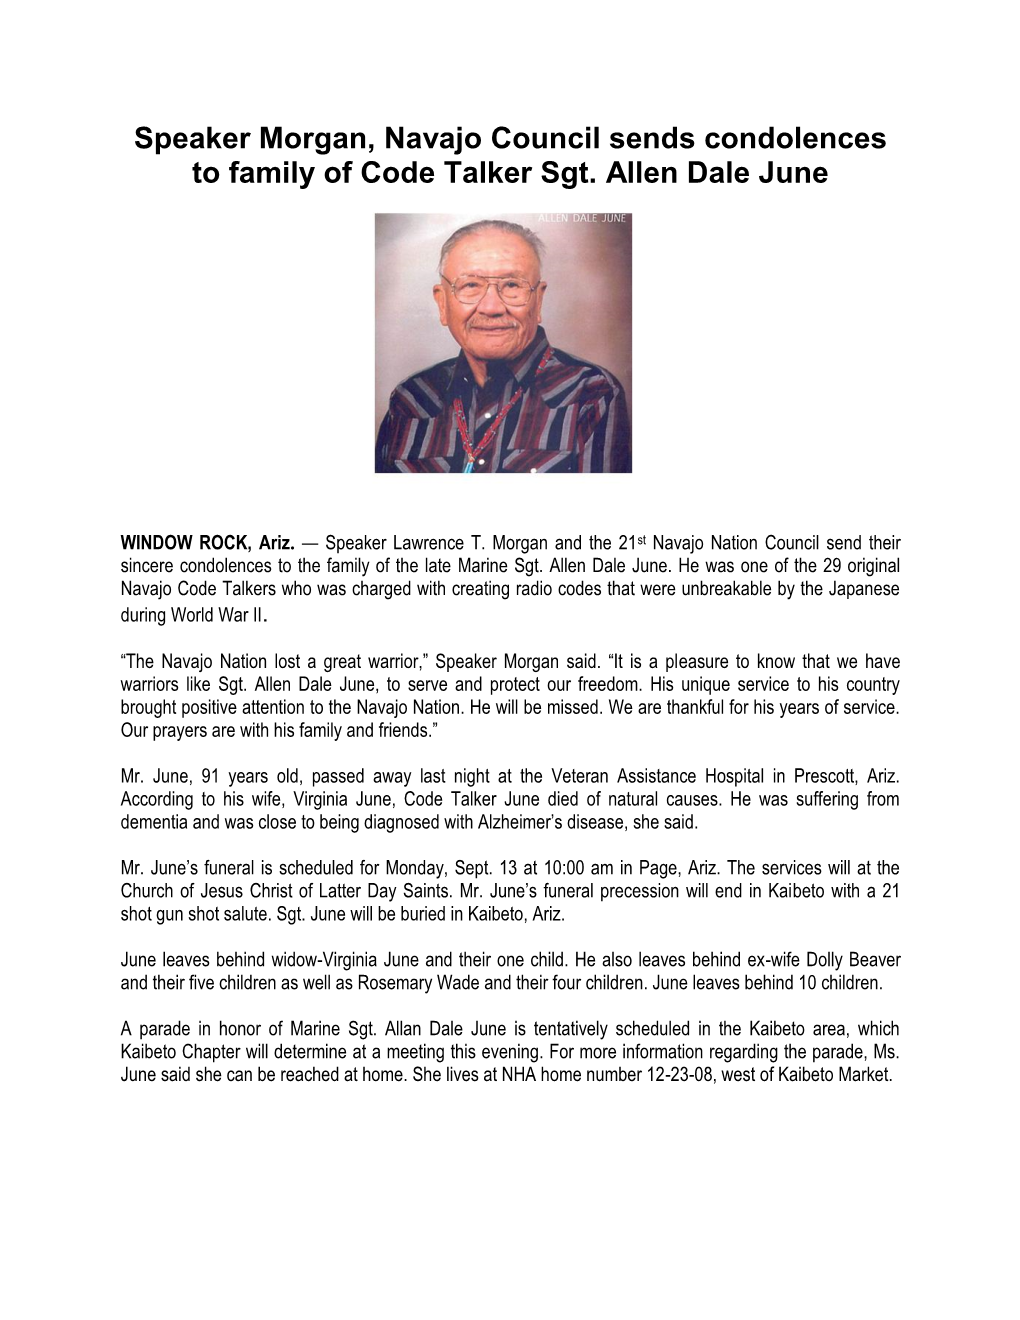 Speaker Morgan, Navajo Council Sends Condolences to Family of Code Talker Sgt